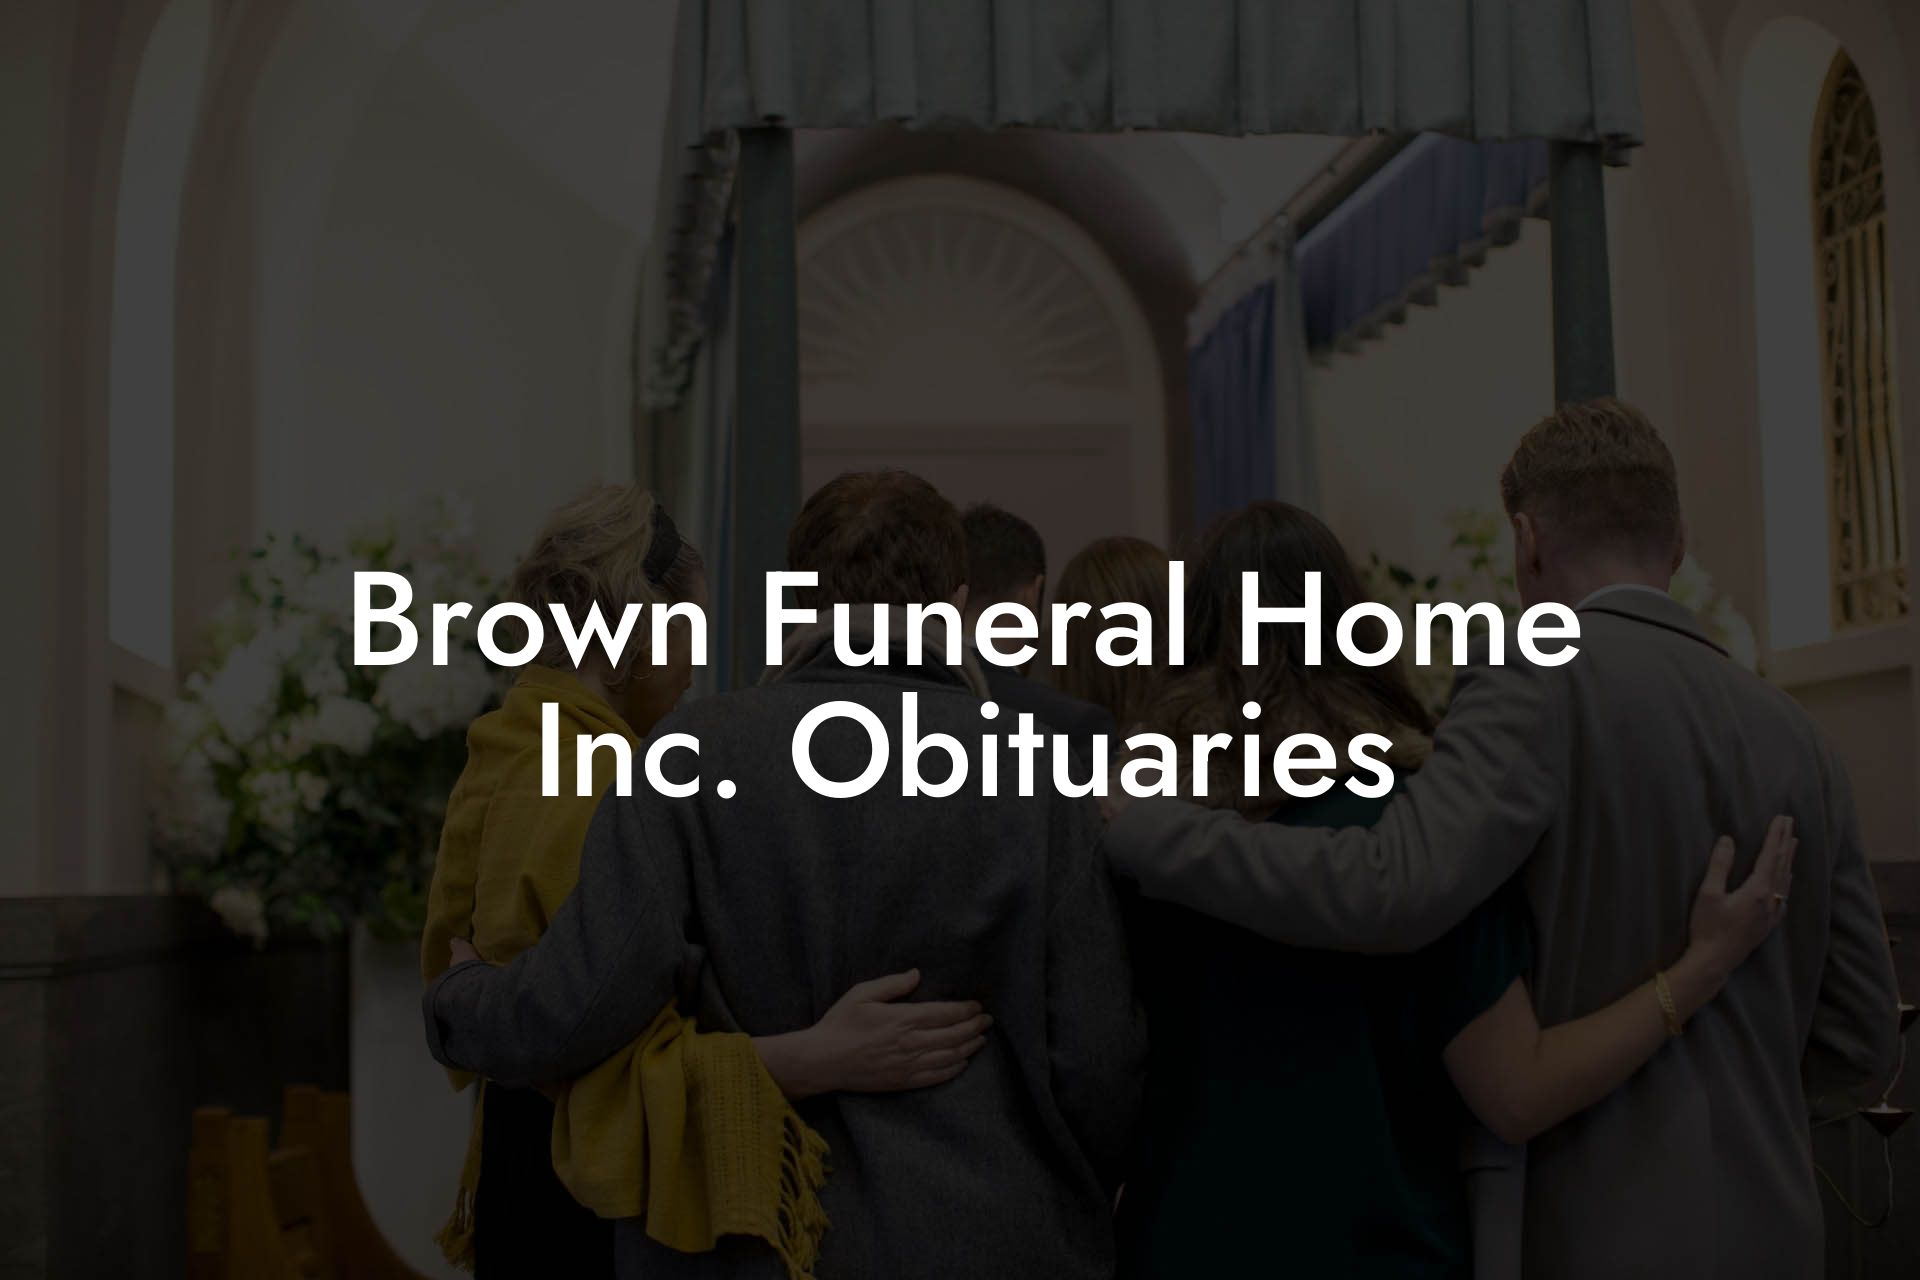 Brown Funeral Home Inc. Obituaries